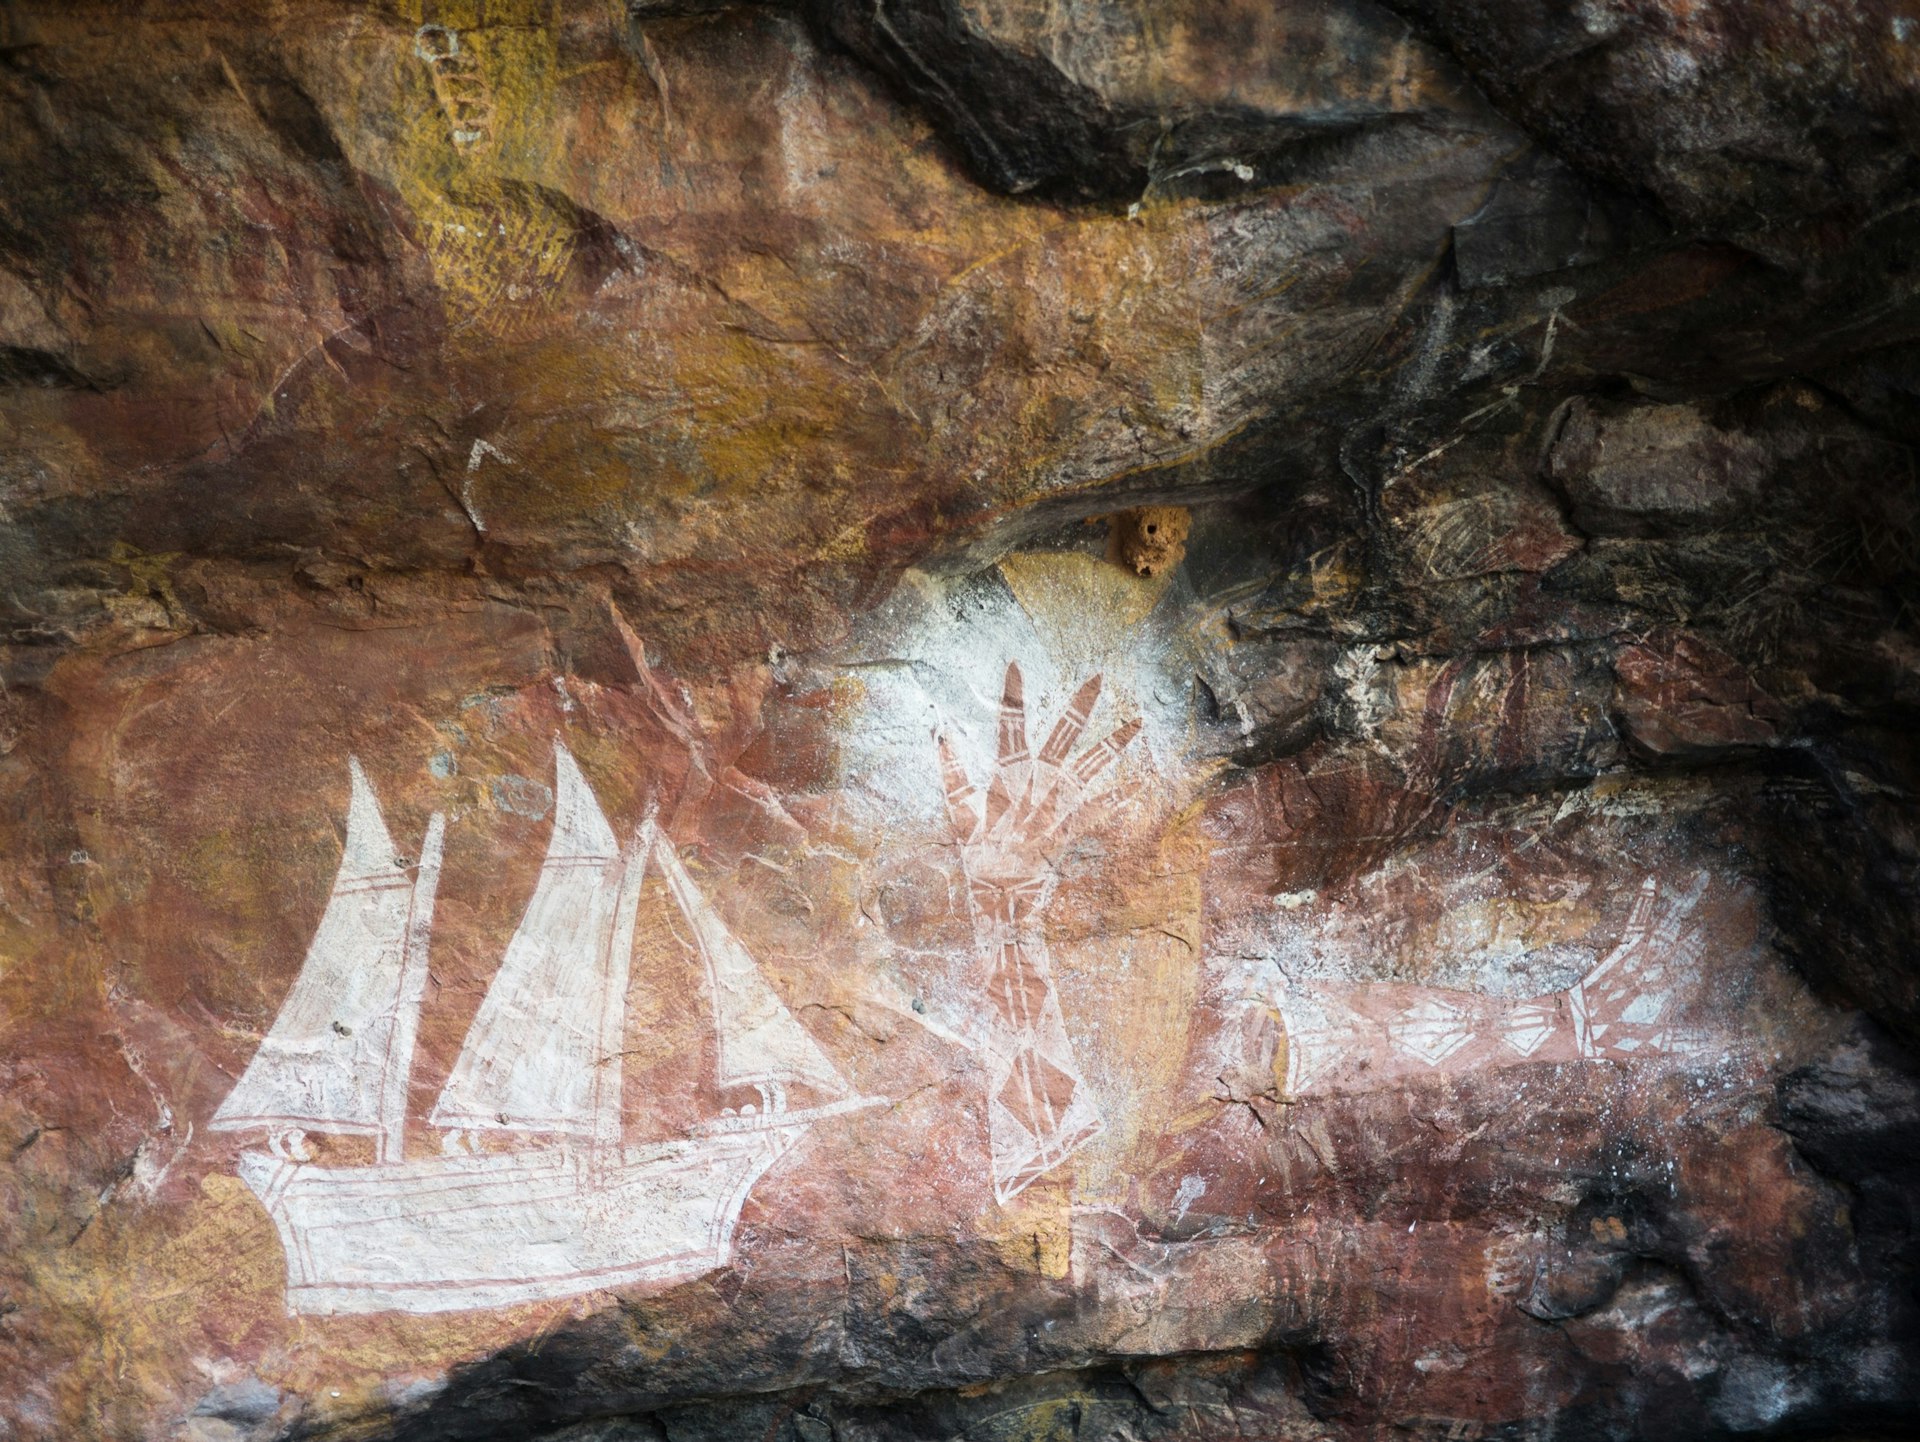 A Macanese sailing ship features in the Aboriginal rock art in Arnhem Land Art, Australia